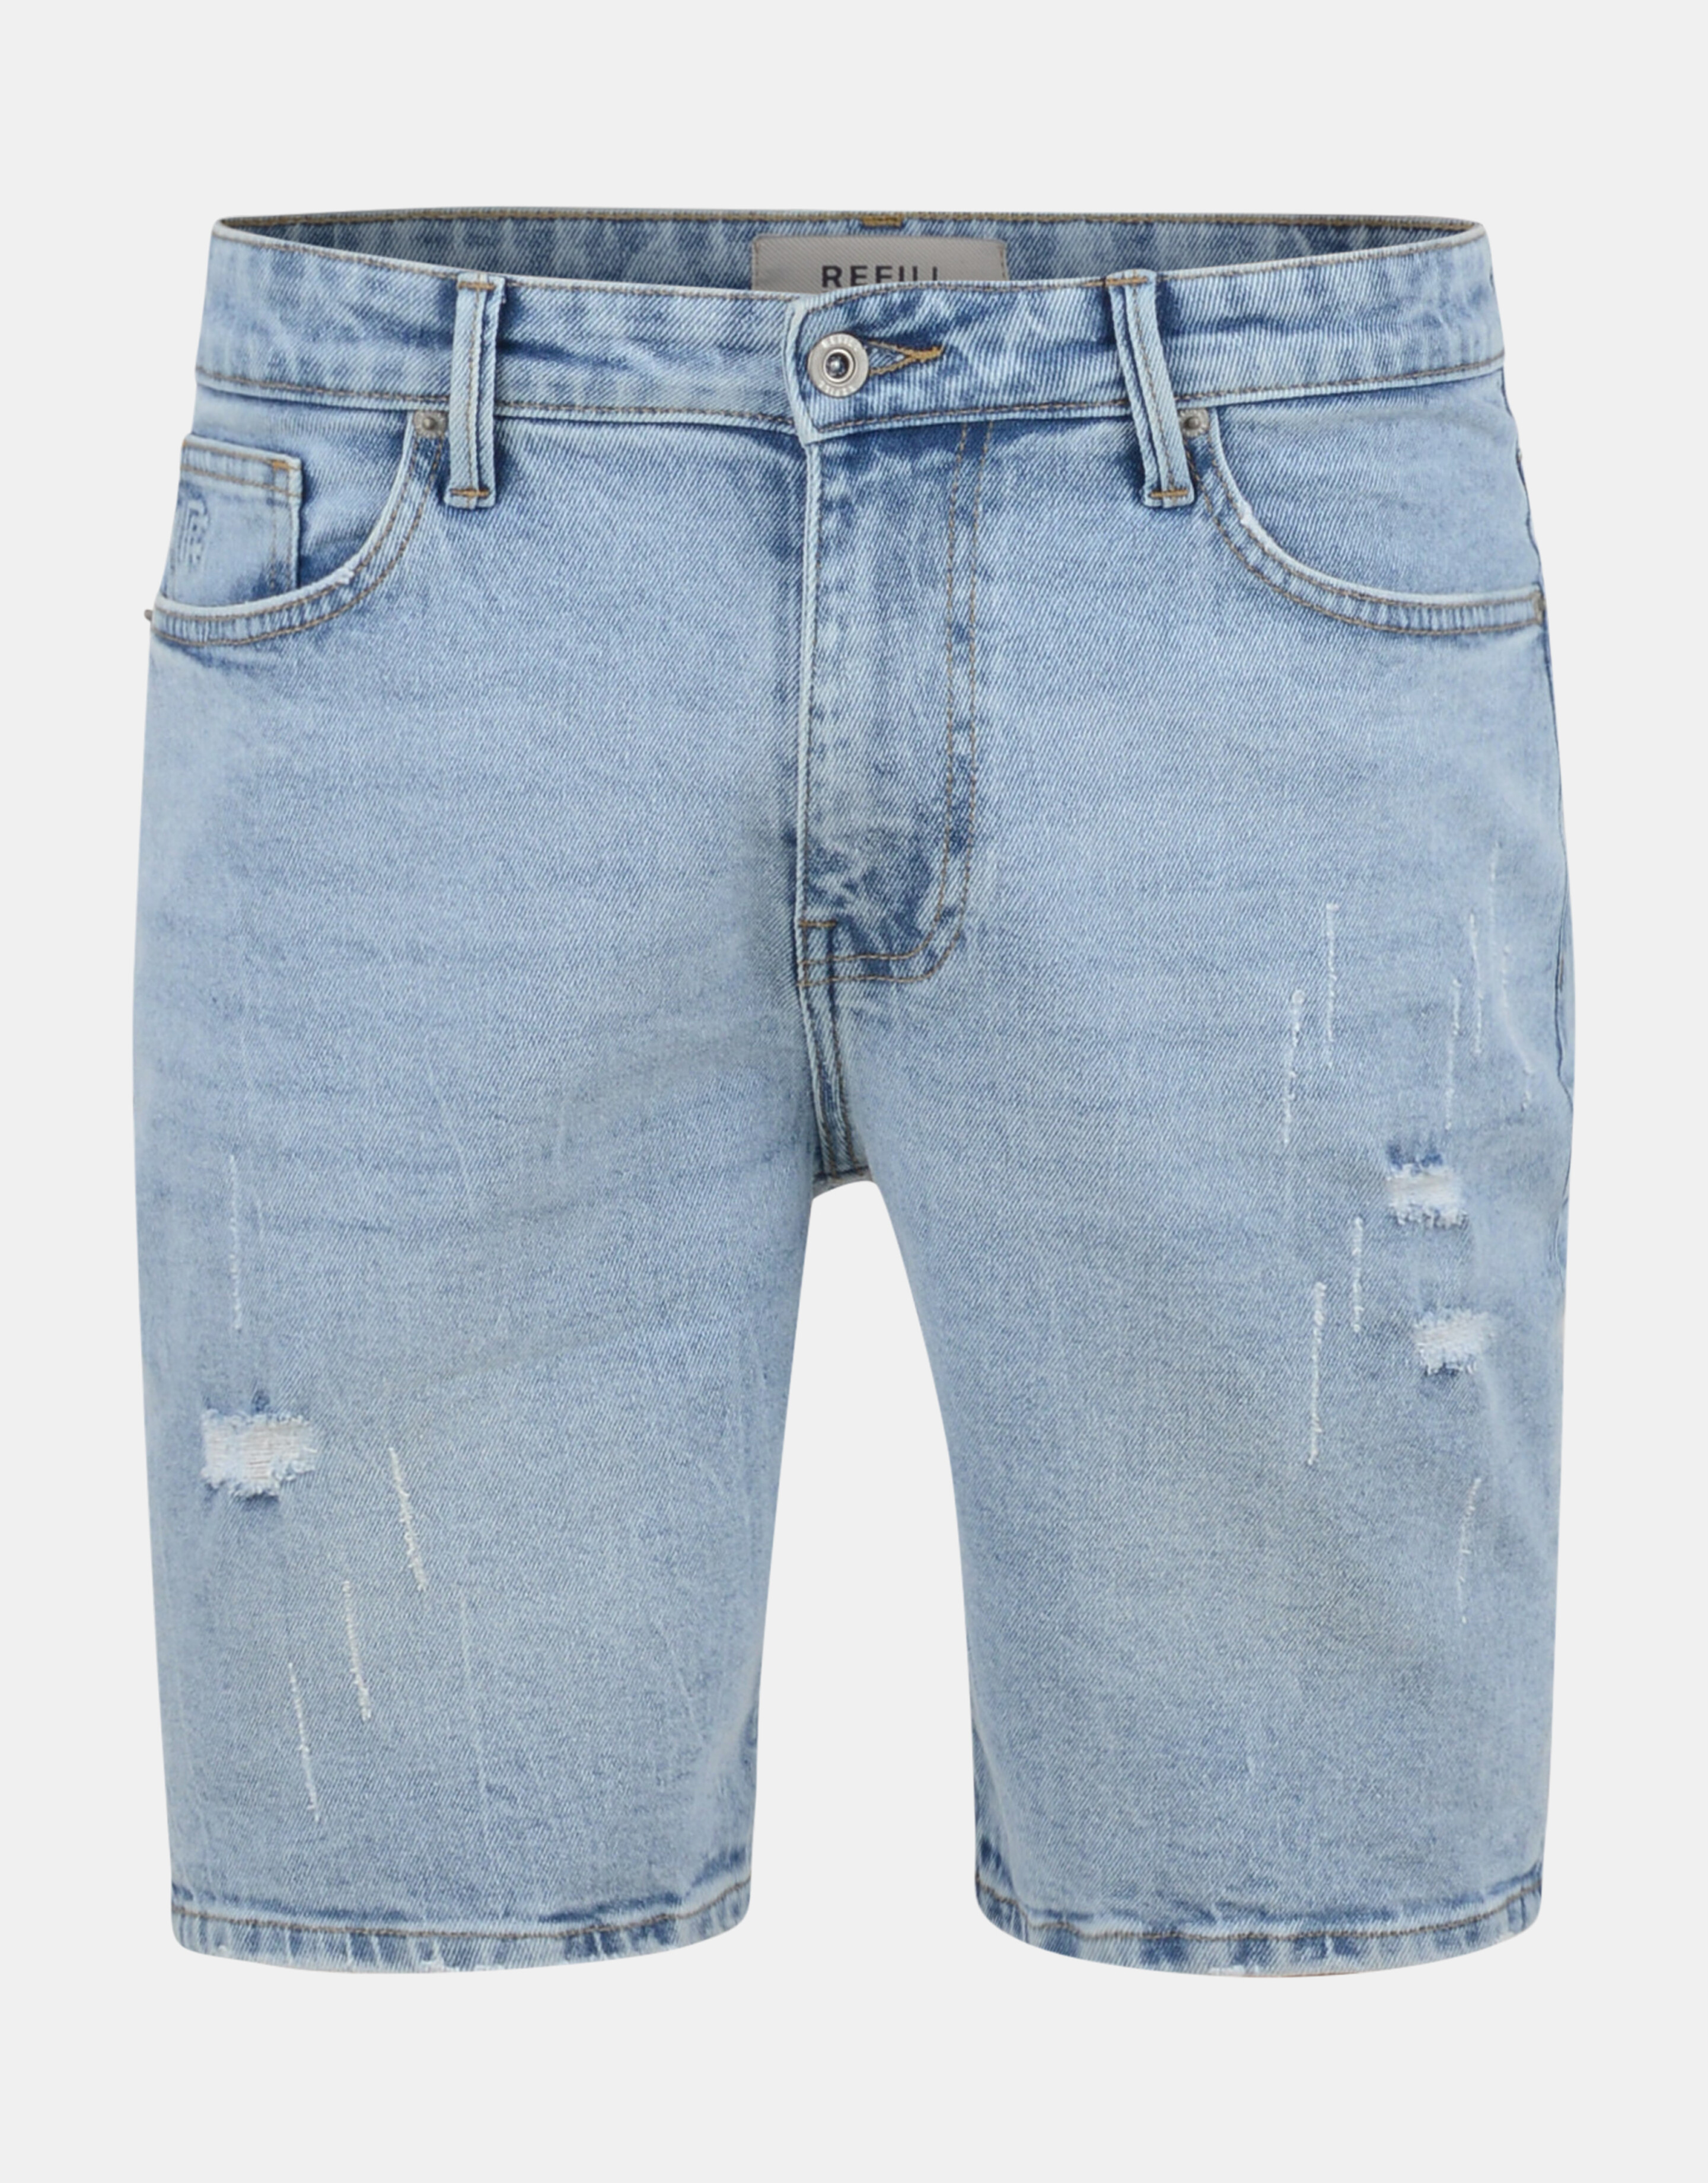 Vintage Destroy Shorts REFILL